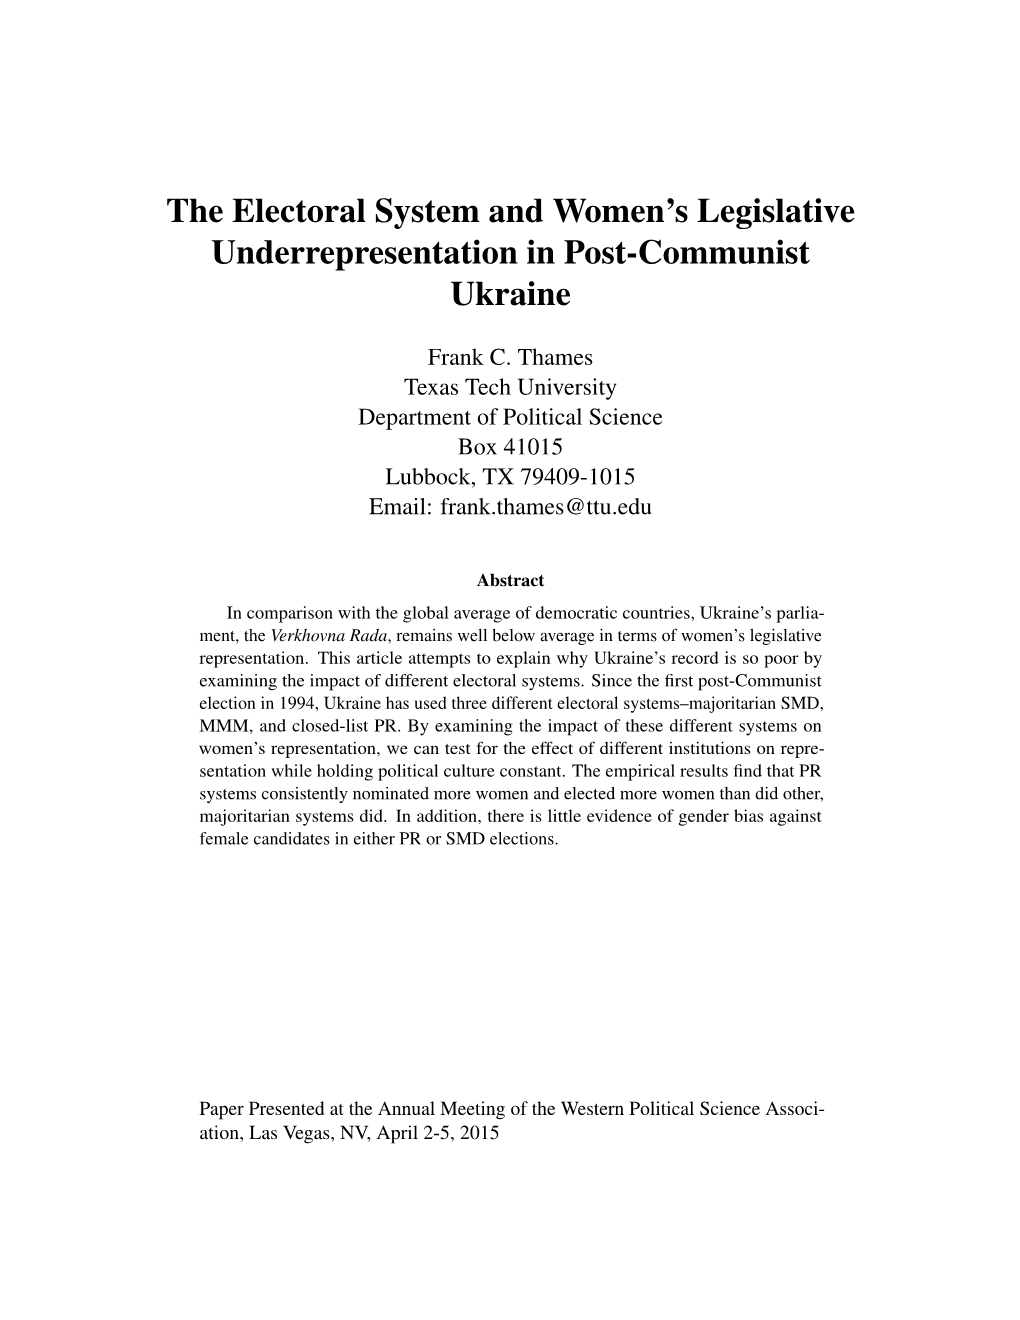 The Electoral System and Women's Legislative Underrepresentation In